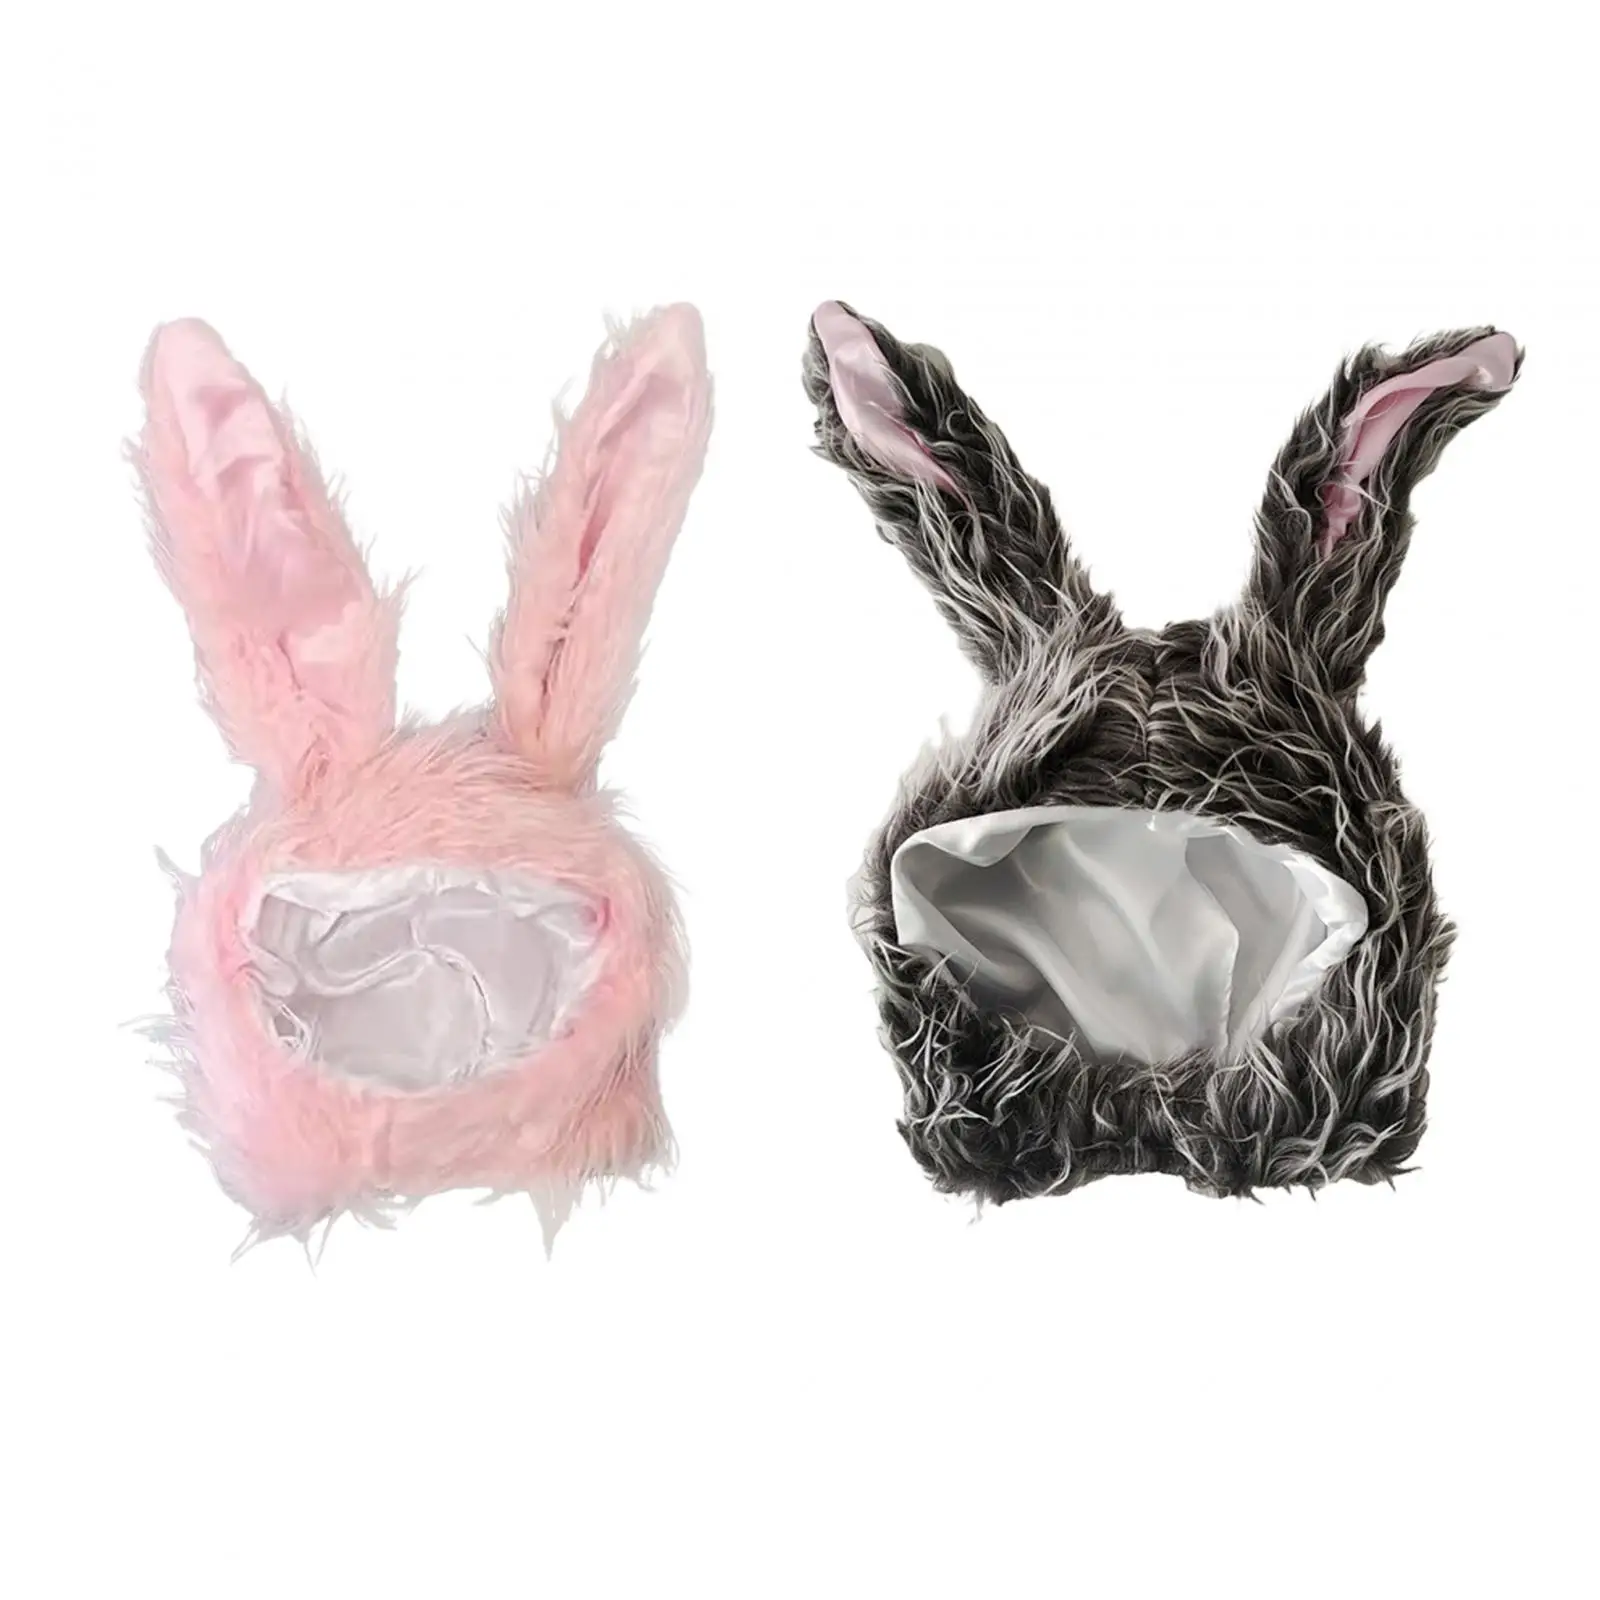 Bunny Ears Hat Plush Decoration Cozy Easter Photograph Prop Warm Soft Headwear for Party Halloween Kids Fancy Dress Women Girls